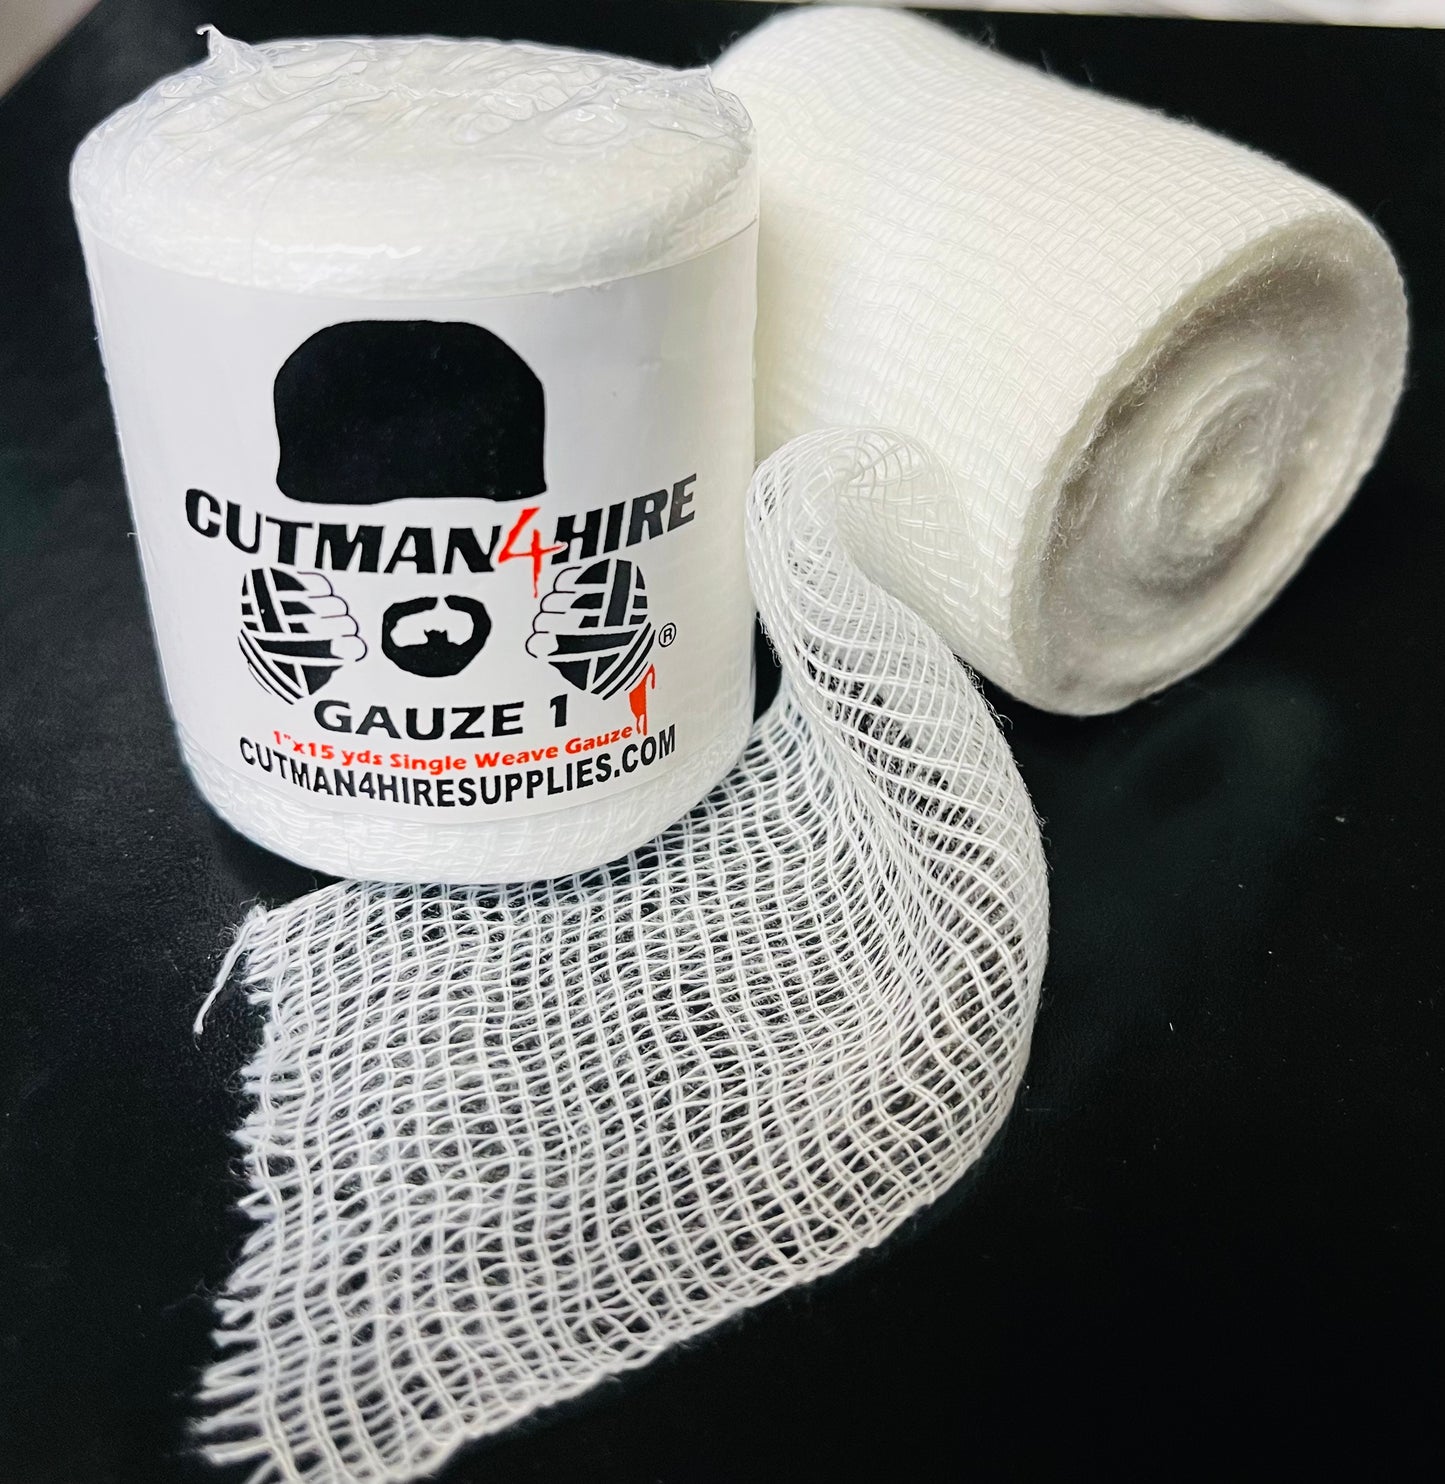 Cutman4hire Gauze 1/ Classic Single Weave Gauze